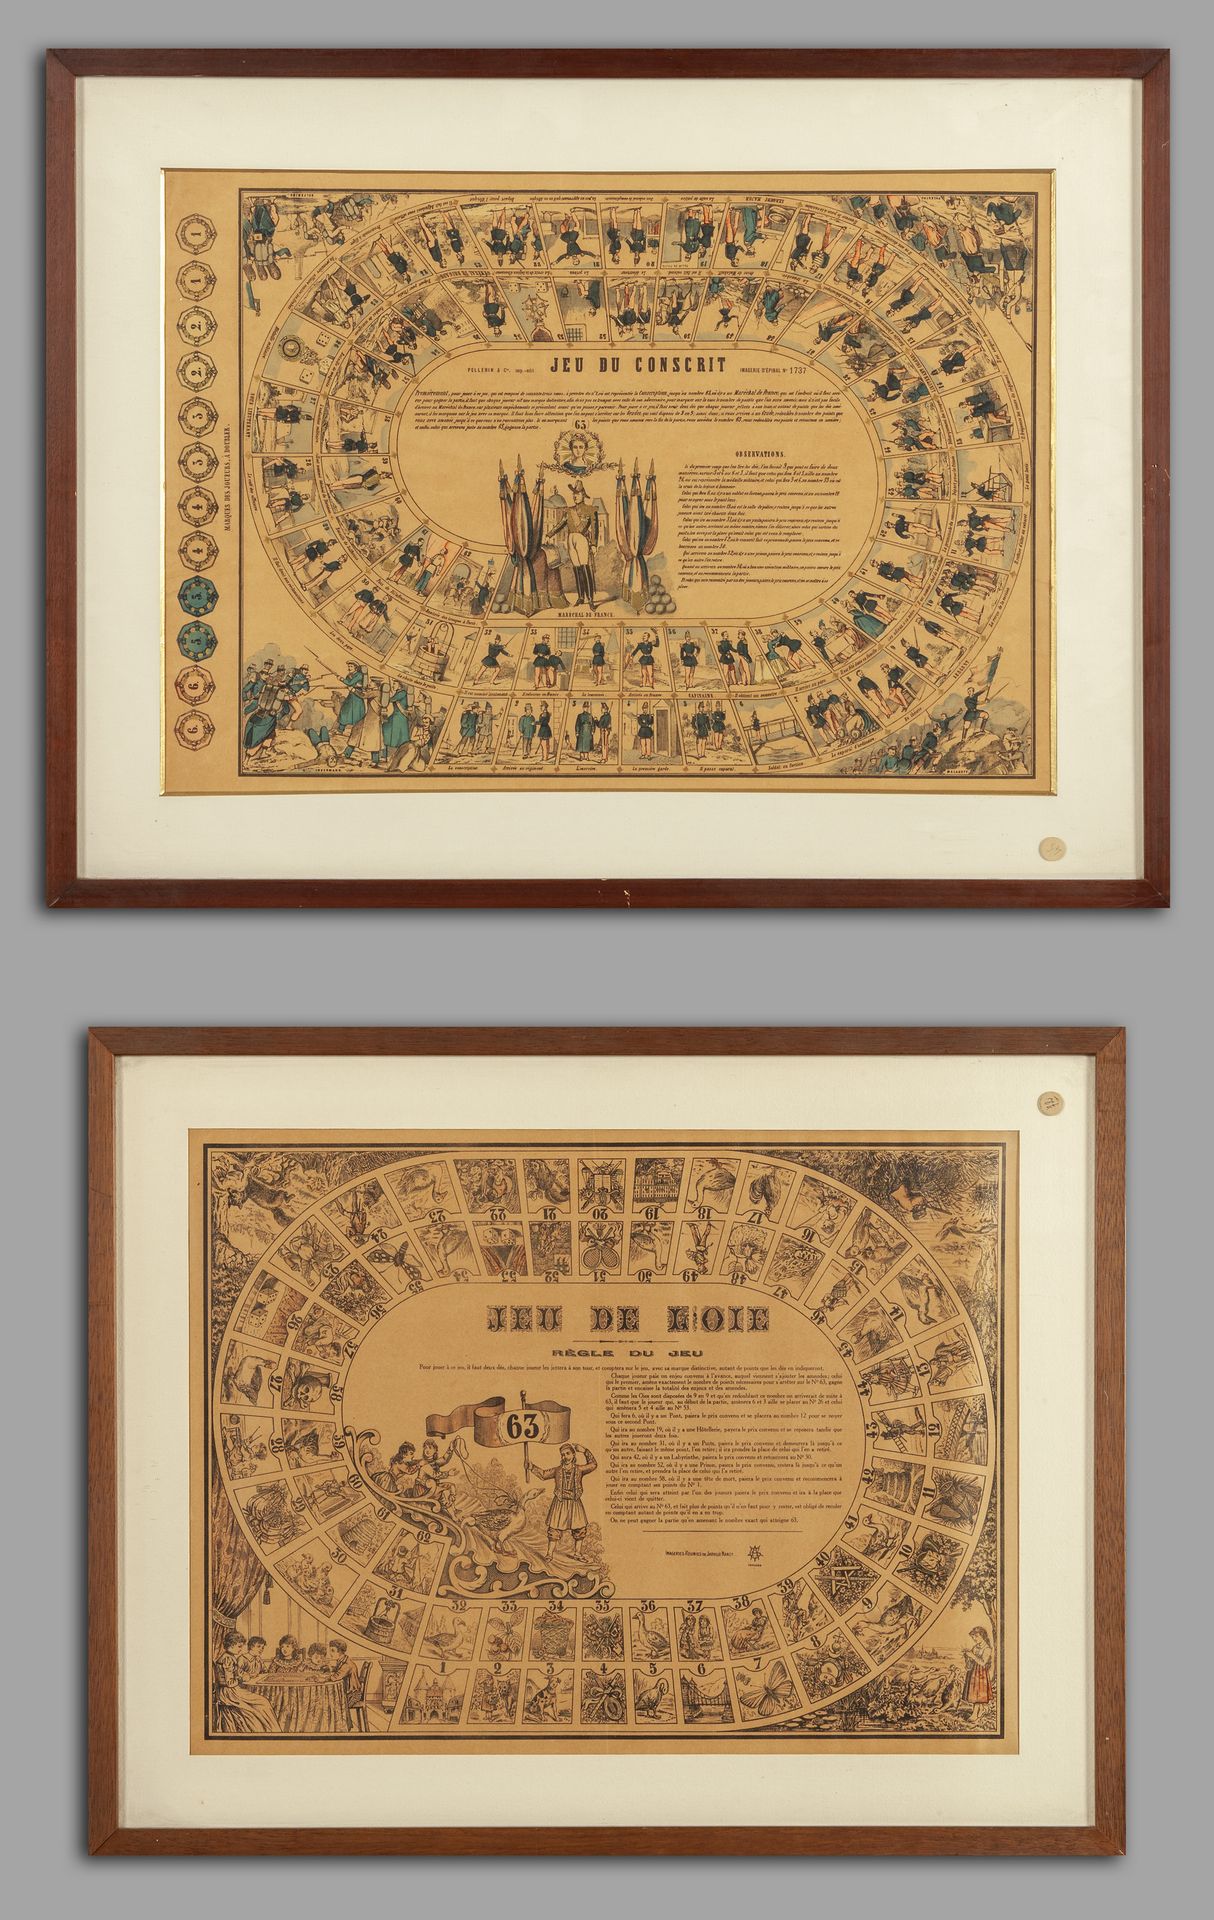 OGGETTISTICA Jeu du conscrit和Game of Goose两幅版画 19世纪